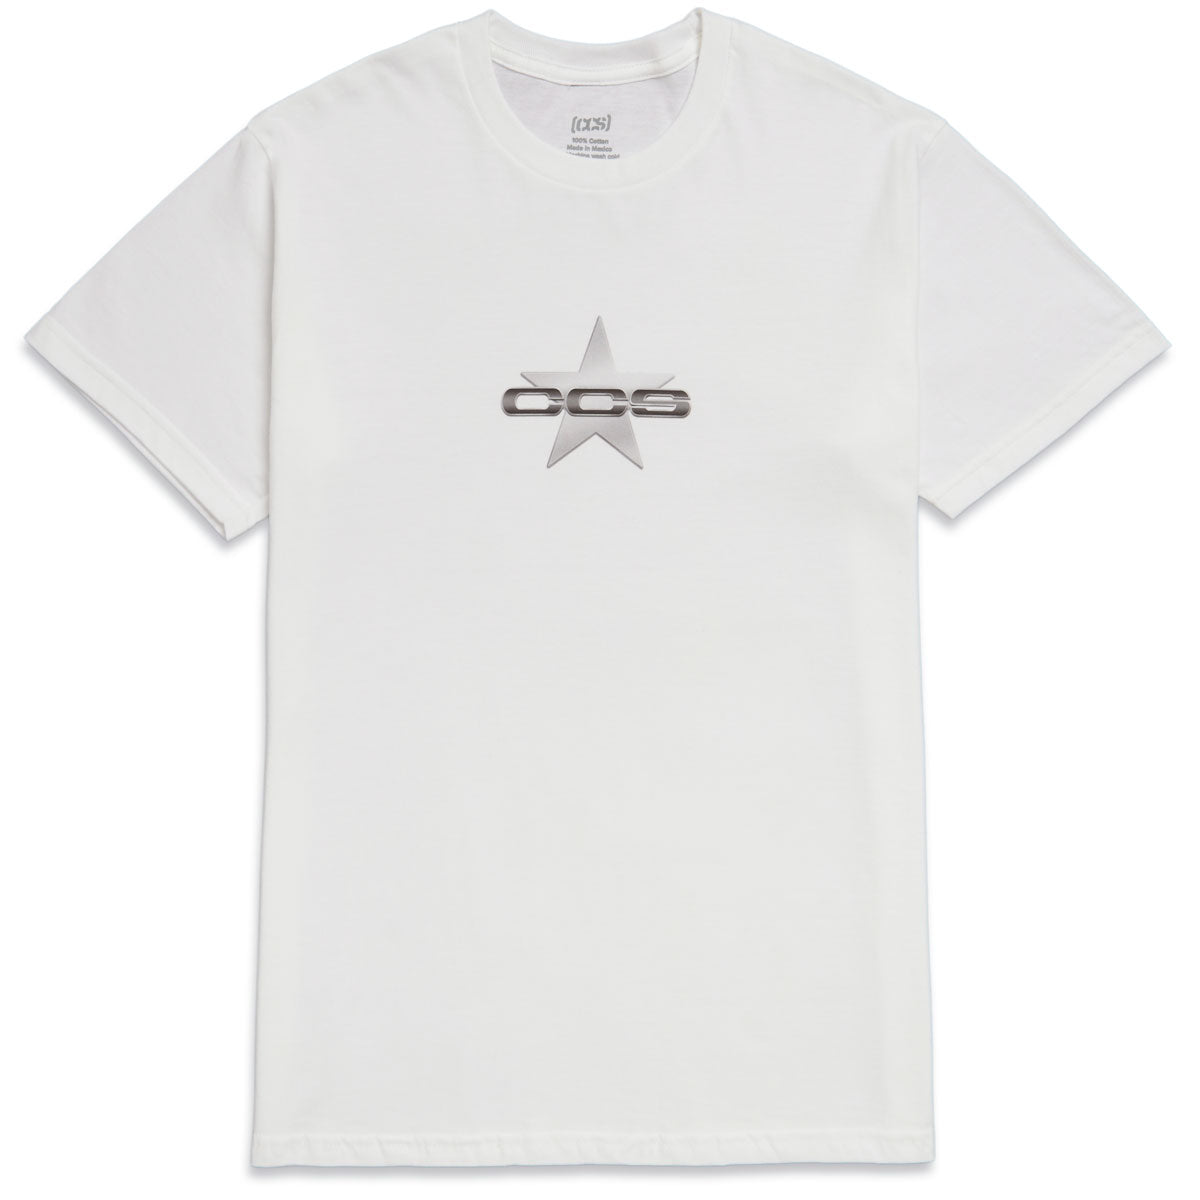 CCS 97 Star T-Shirt - White - XL image 1